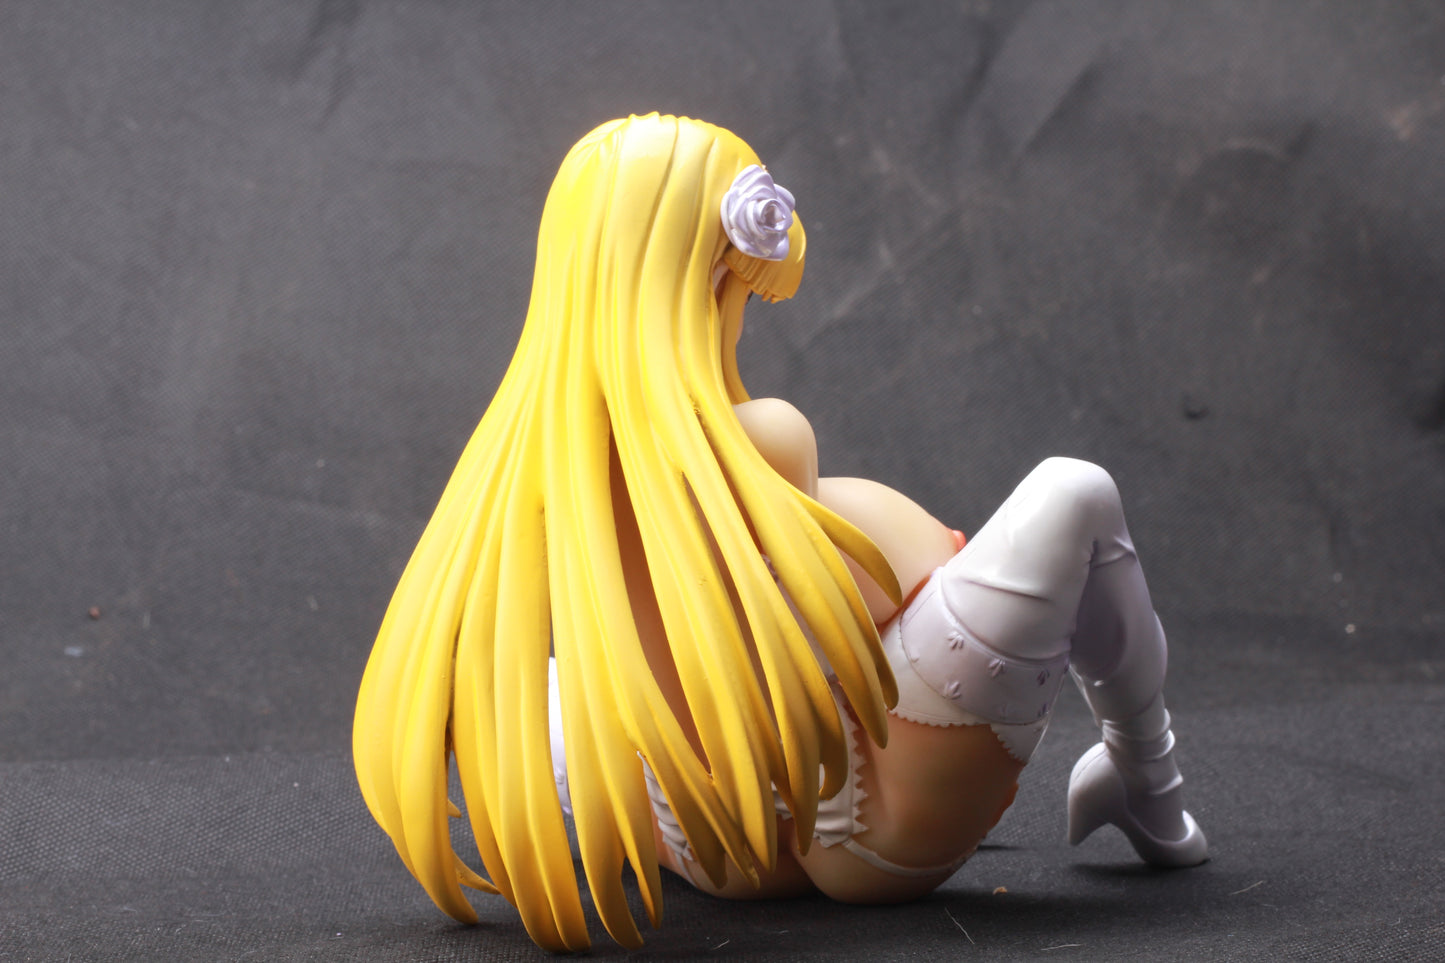 Nunnally Vi Britannia huge breast 1/6 anime girl figure nude anime figure